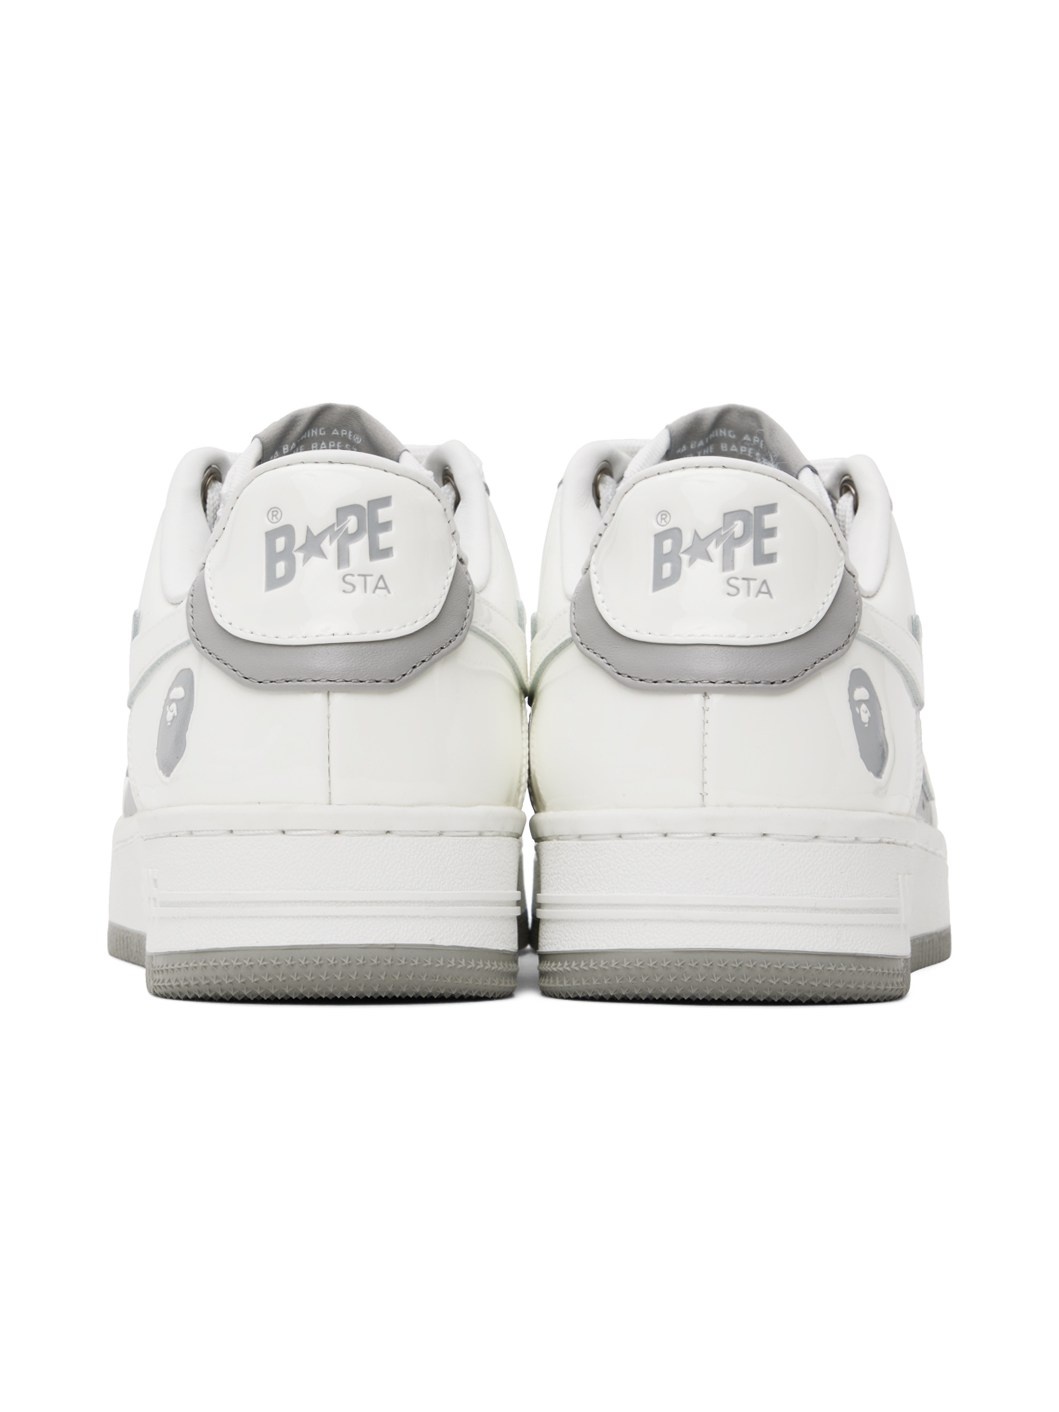 White & Gray STA #6 Sneakers - 2